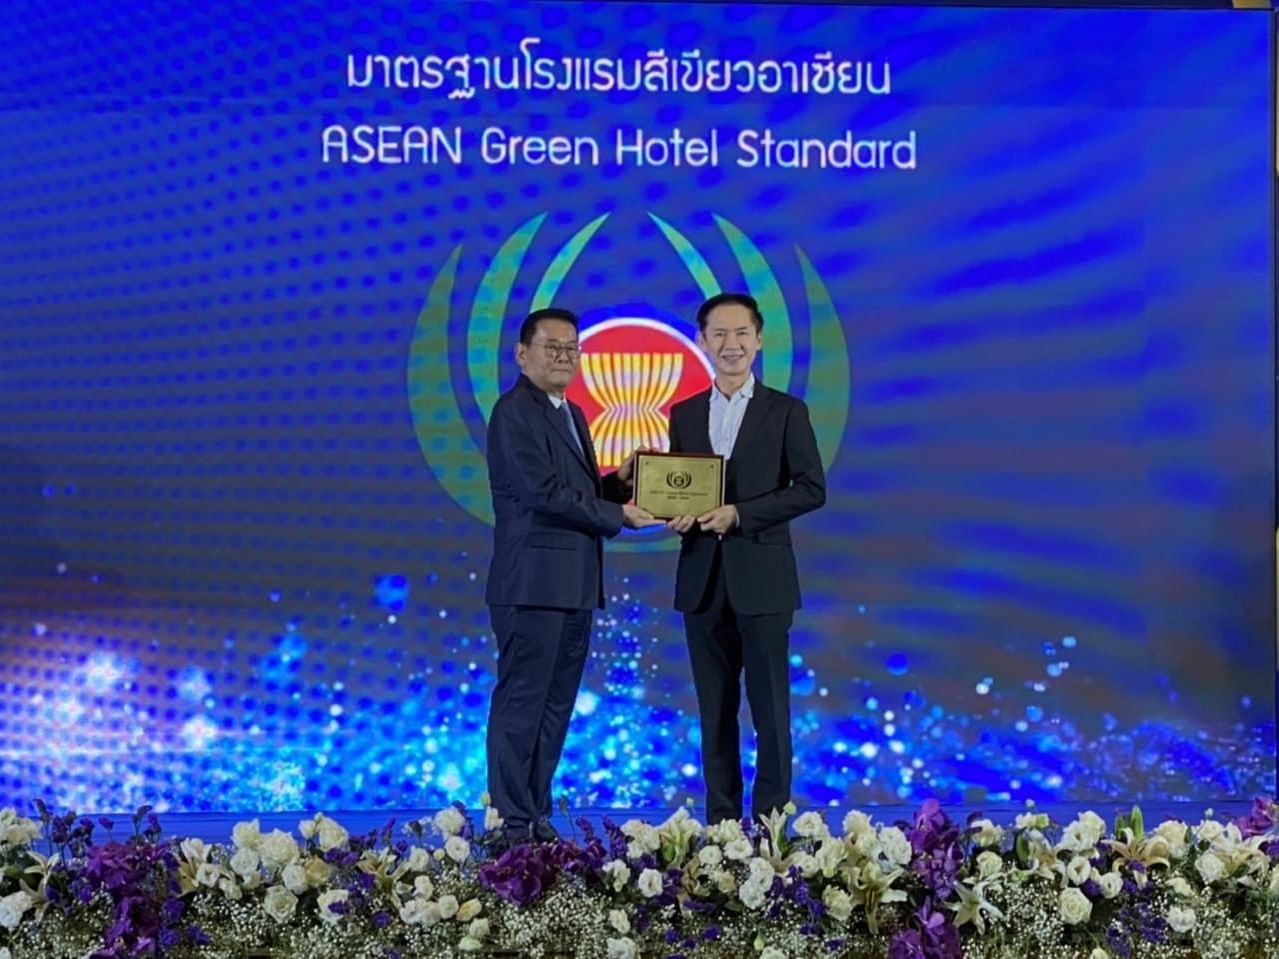 ASEAN Green Hotel Standard Award ceremony, Emporium Suites